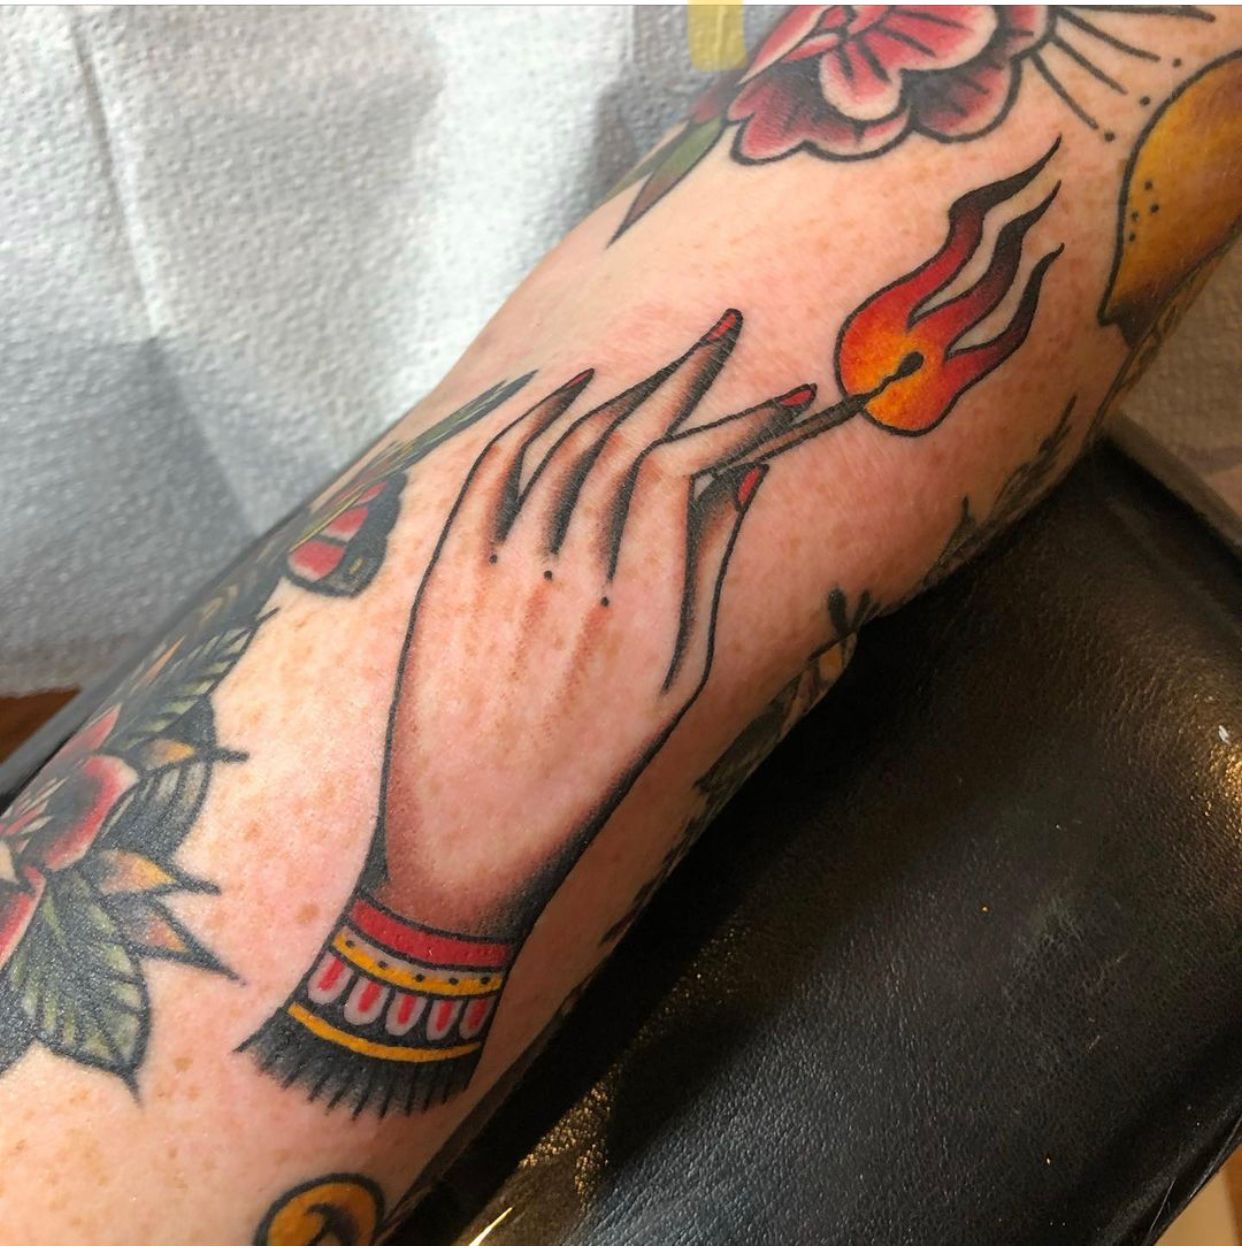 Cute meaningful tattoo last week   Amy J Tattoo Artist  Facebook